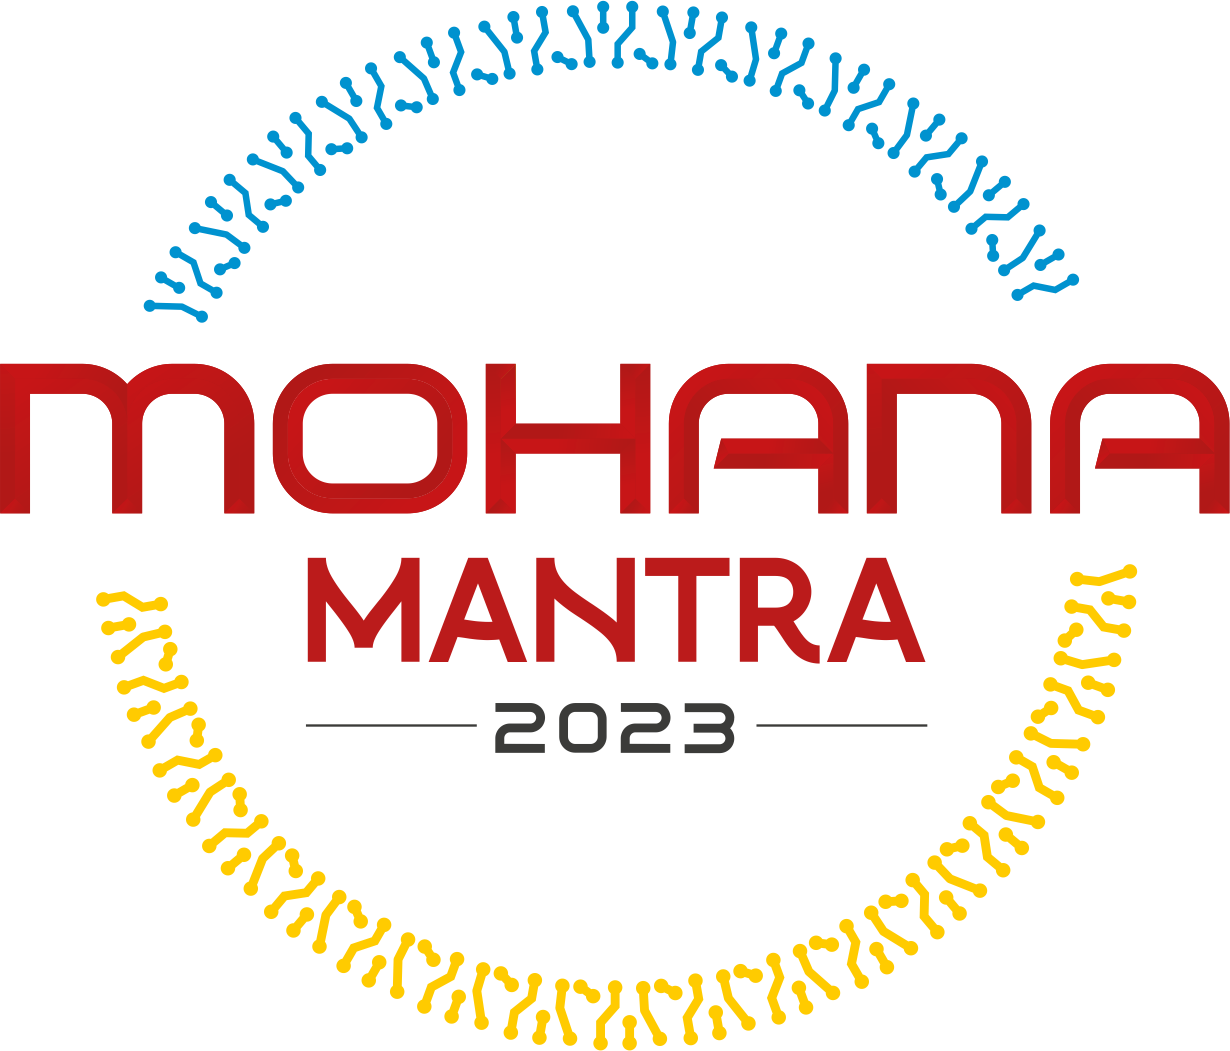 Mantra Logo Mockup by Brian Behm on Dribbble